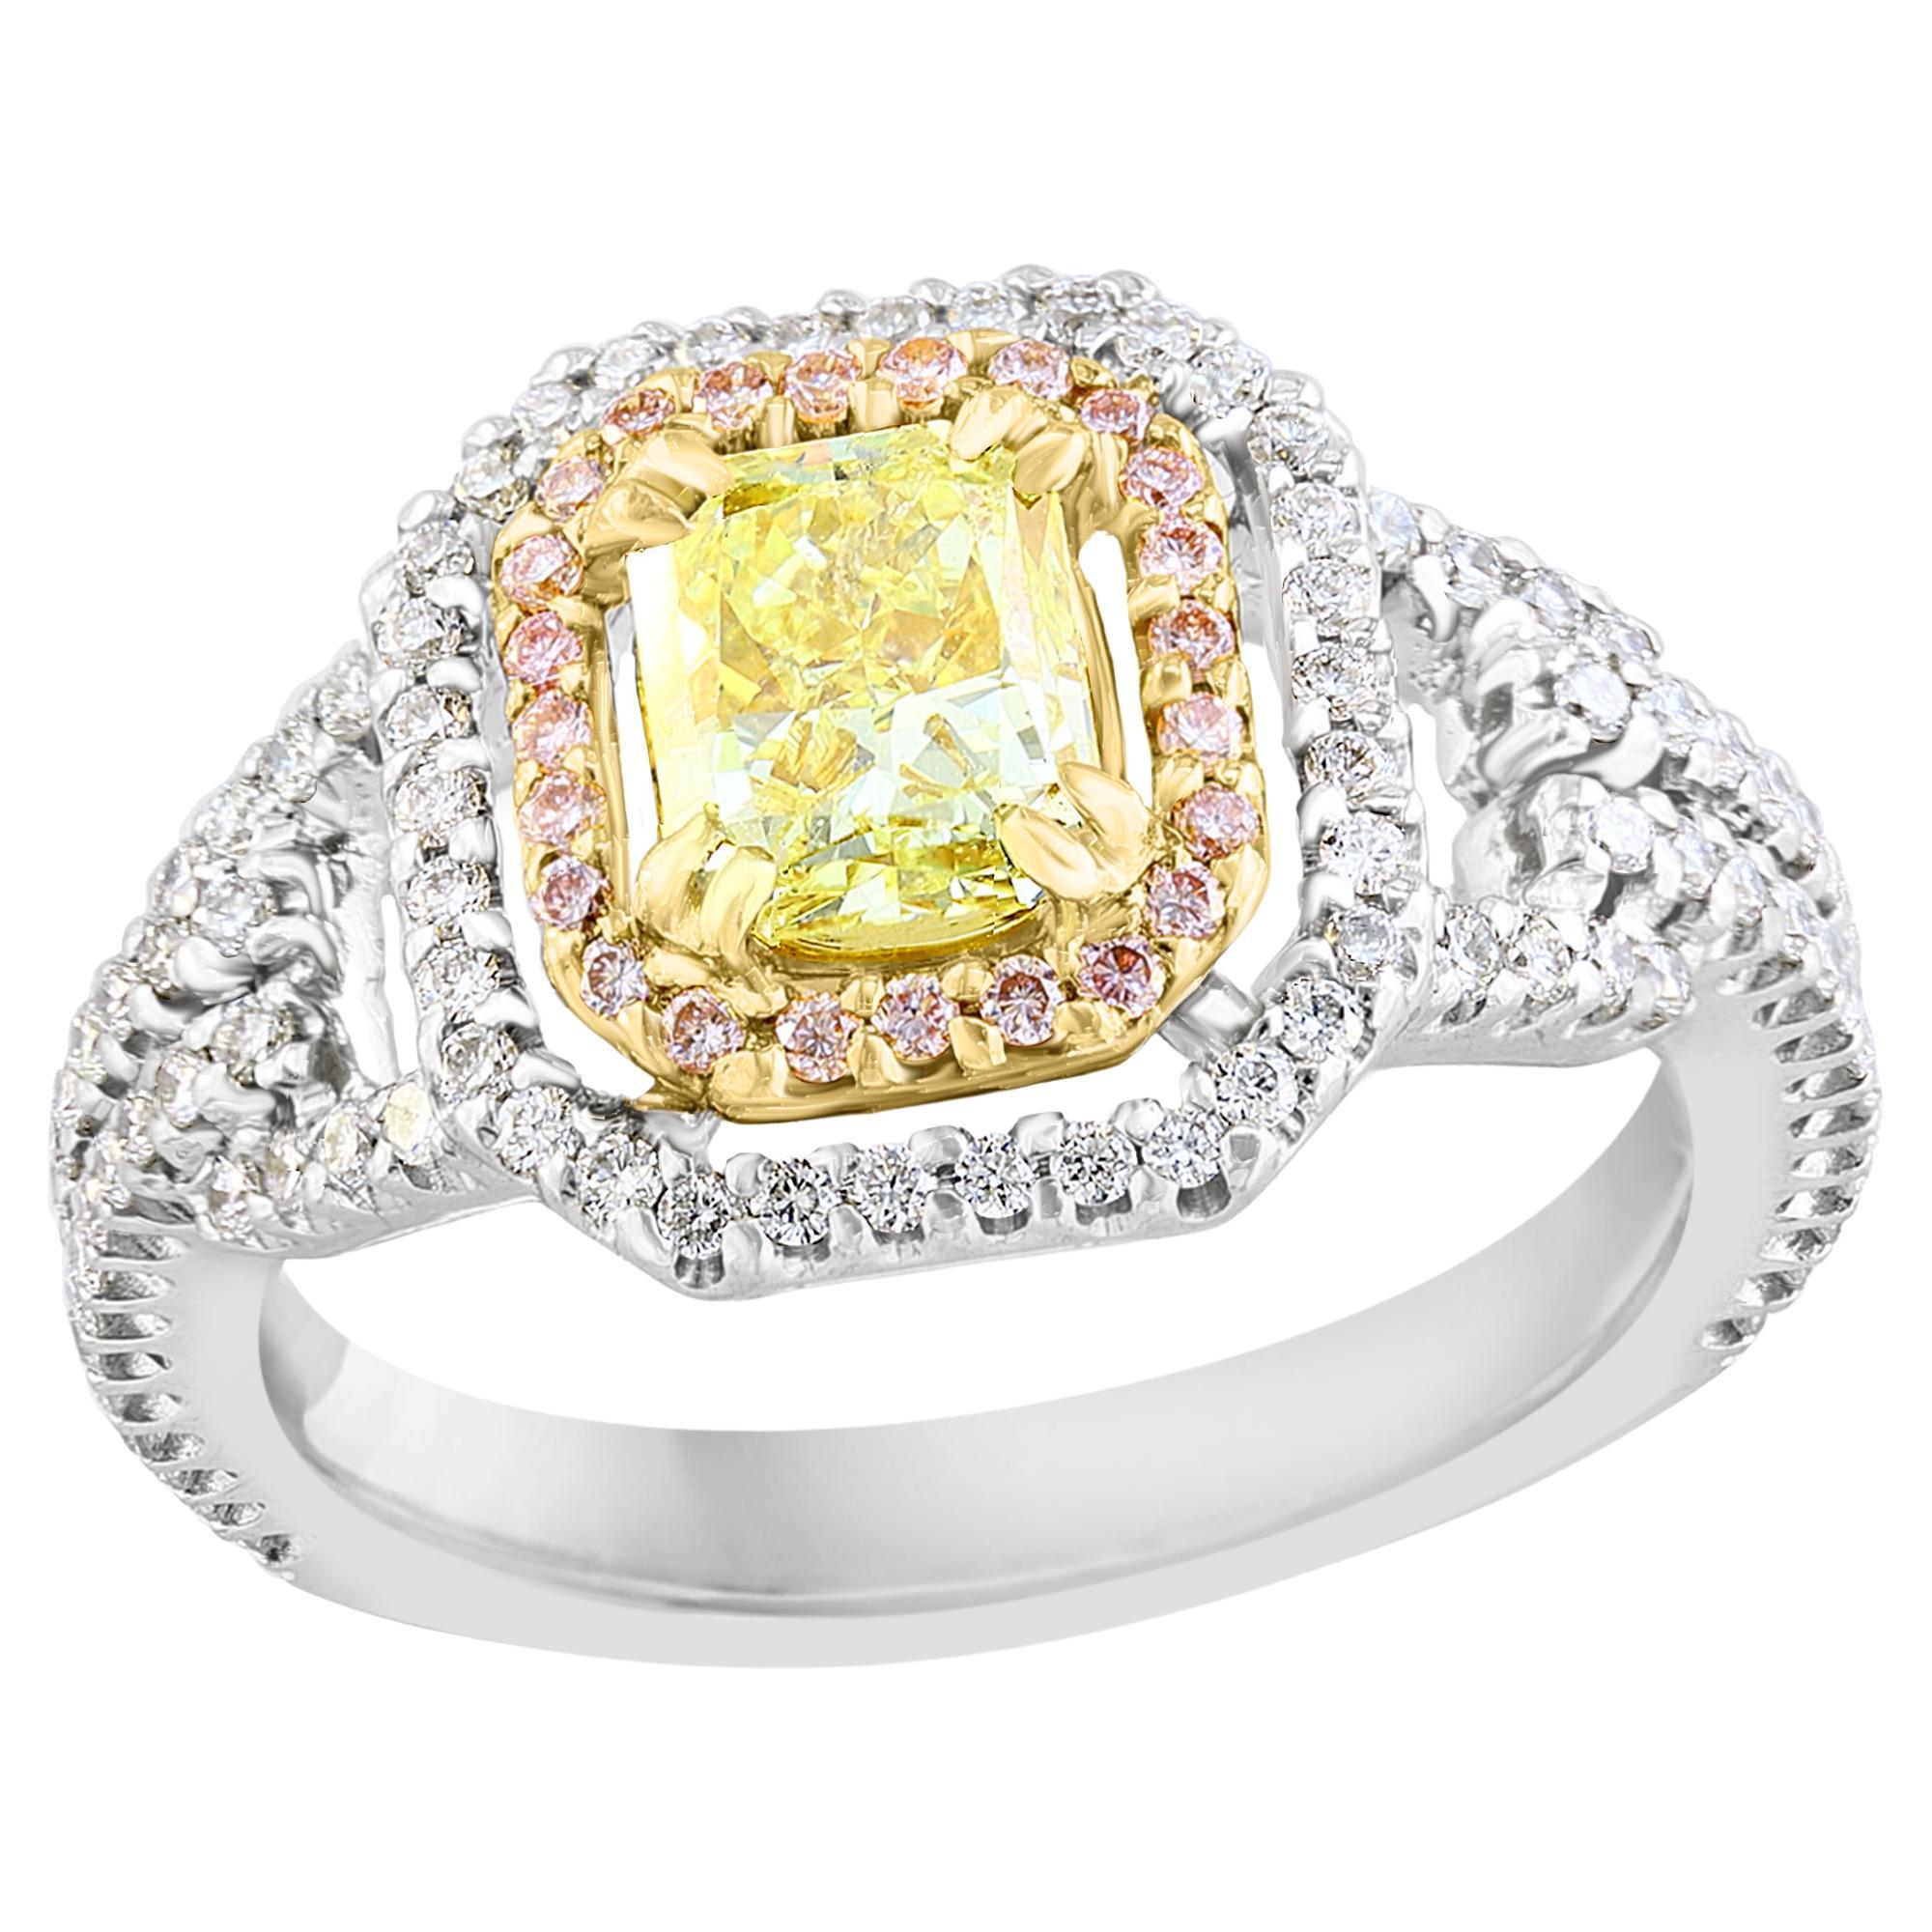 1 Carat Emerald Cut Yellow Diamond Ring in 18k Mix Gold